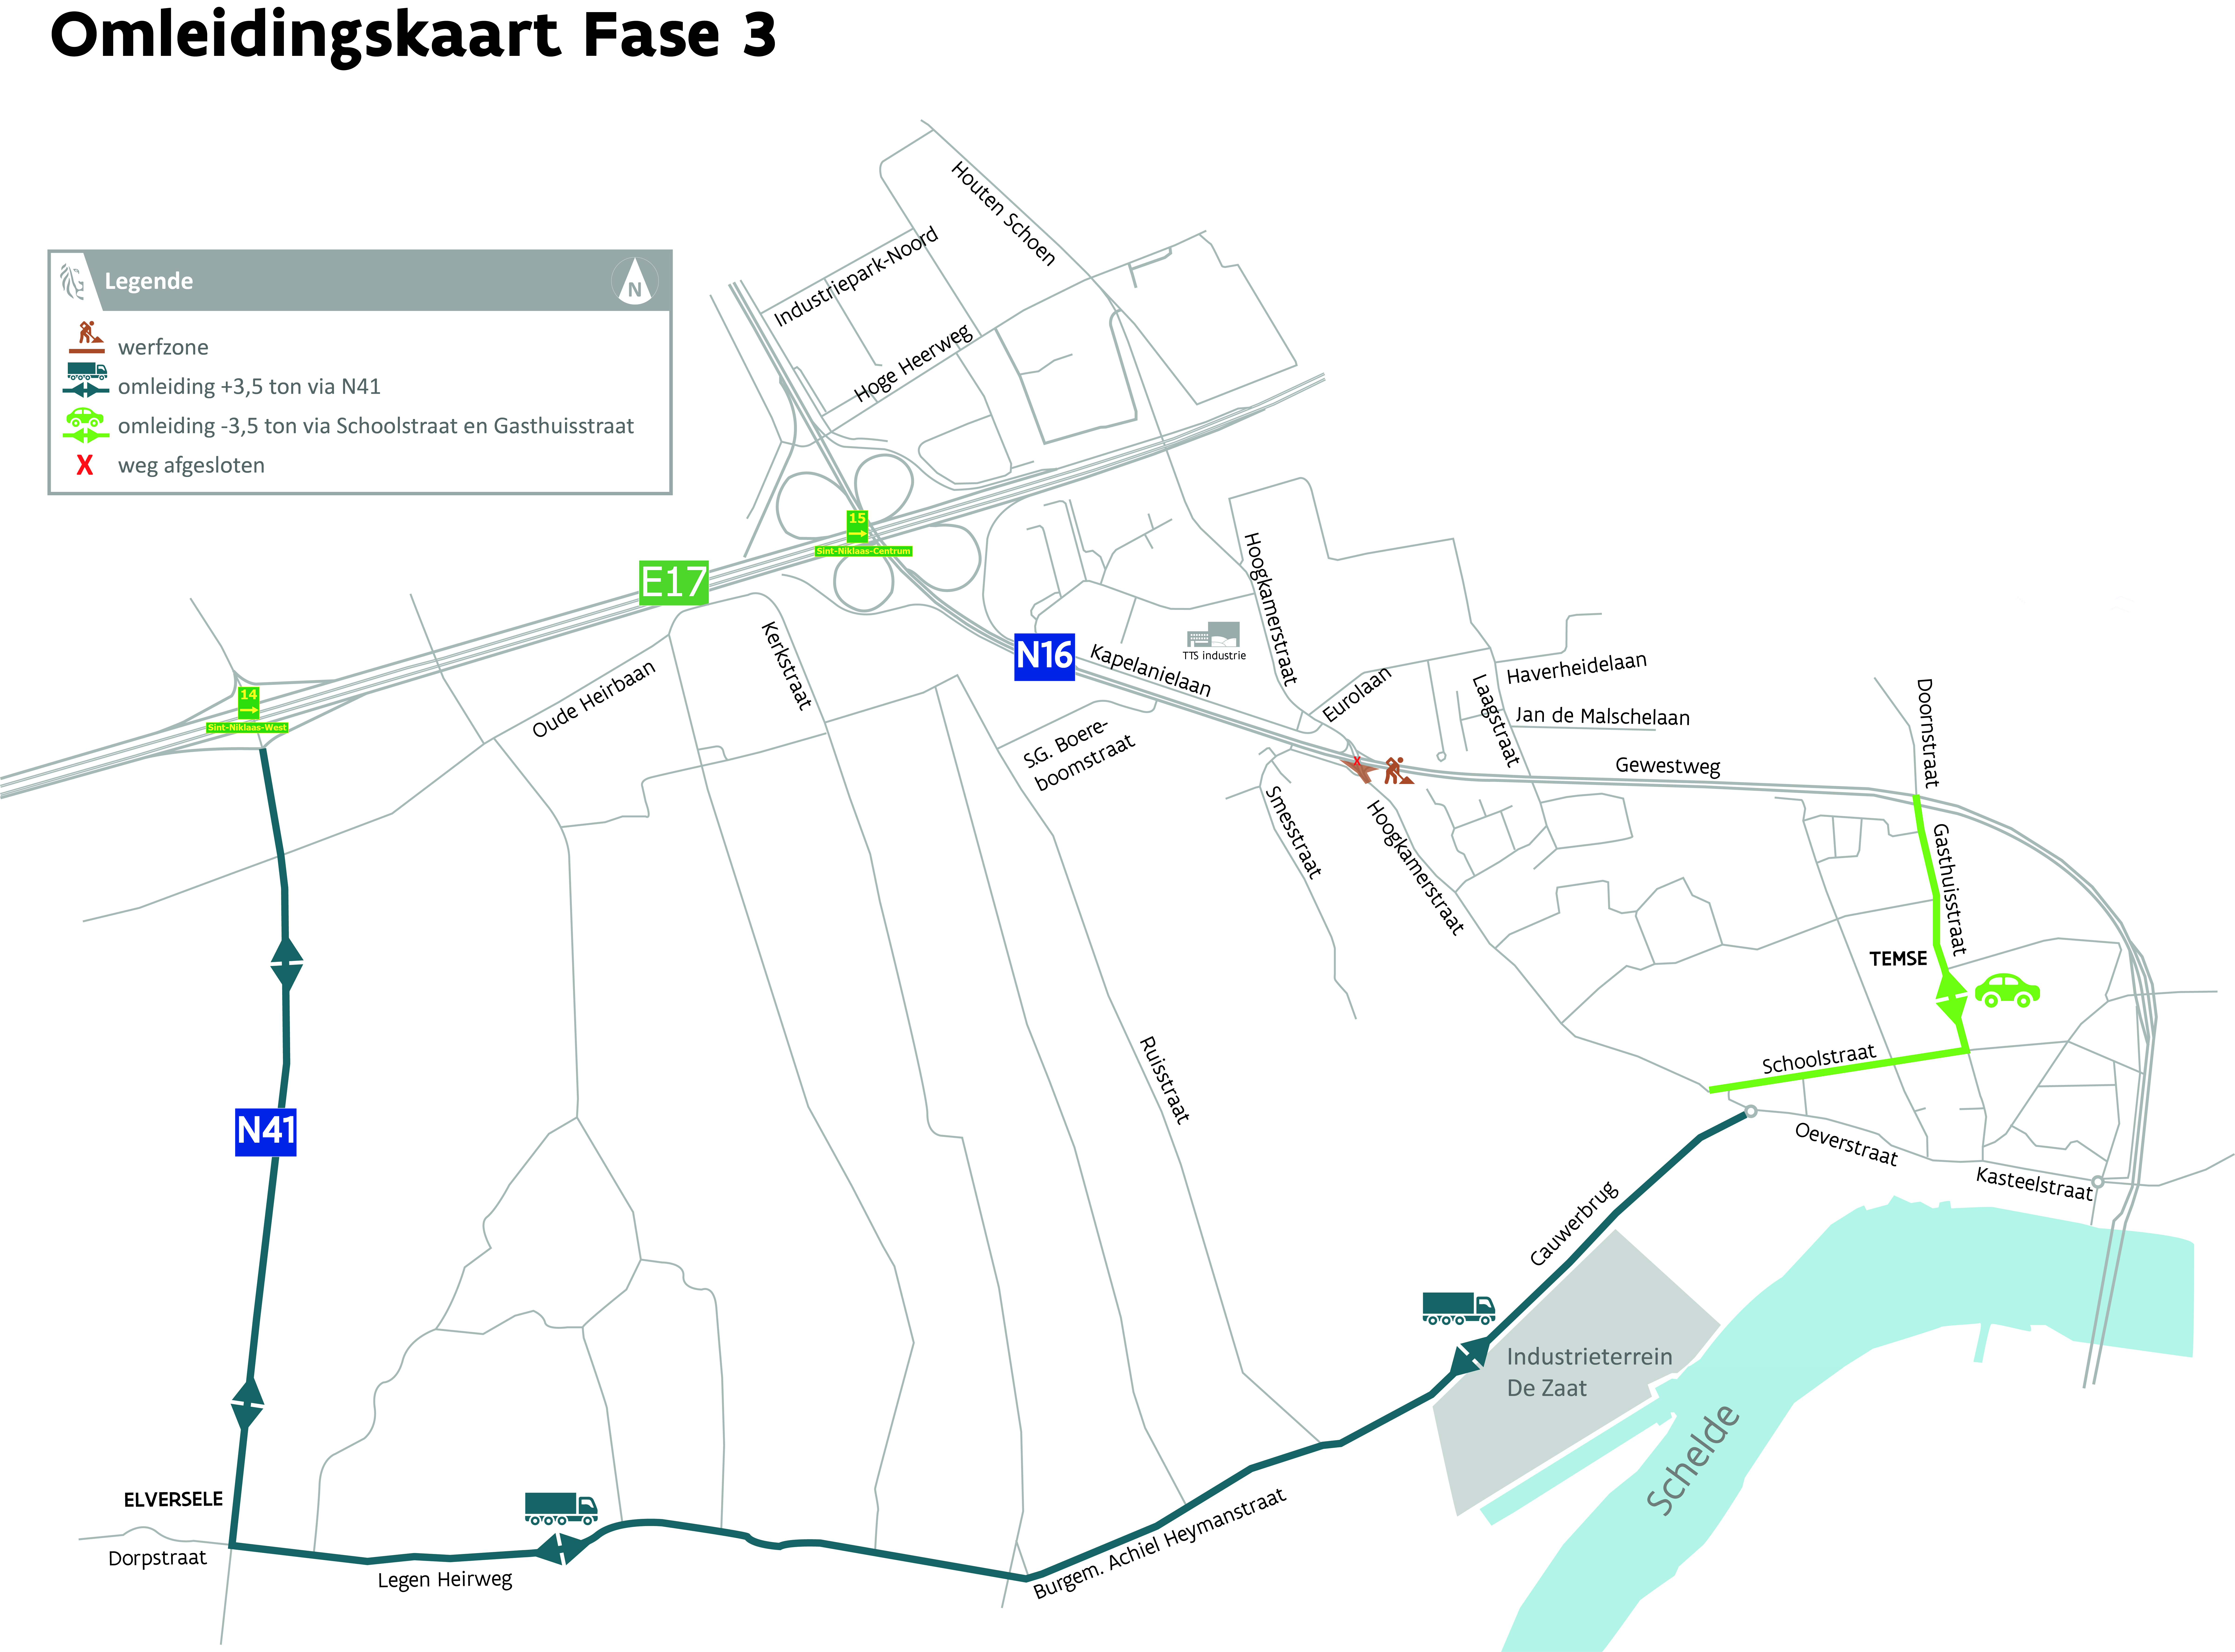 N16 Hoogkamerstraat - omleiding wegen-en rioleringswerken fase 3